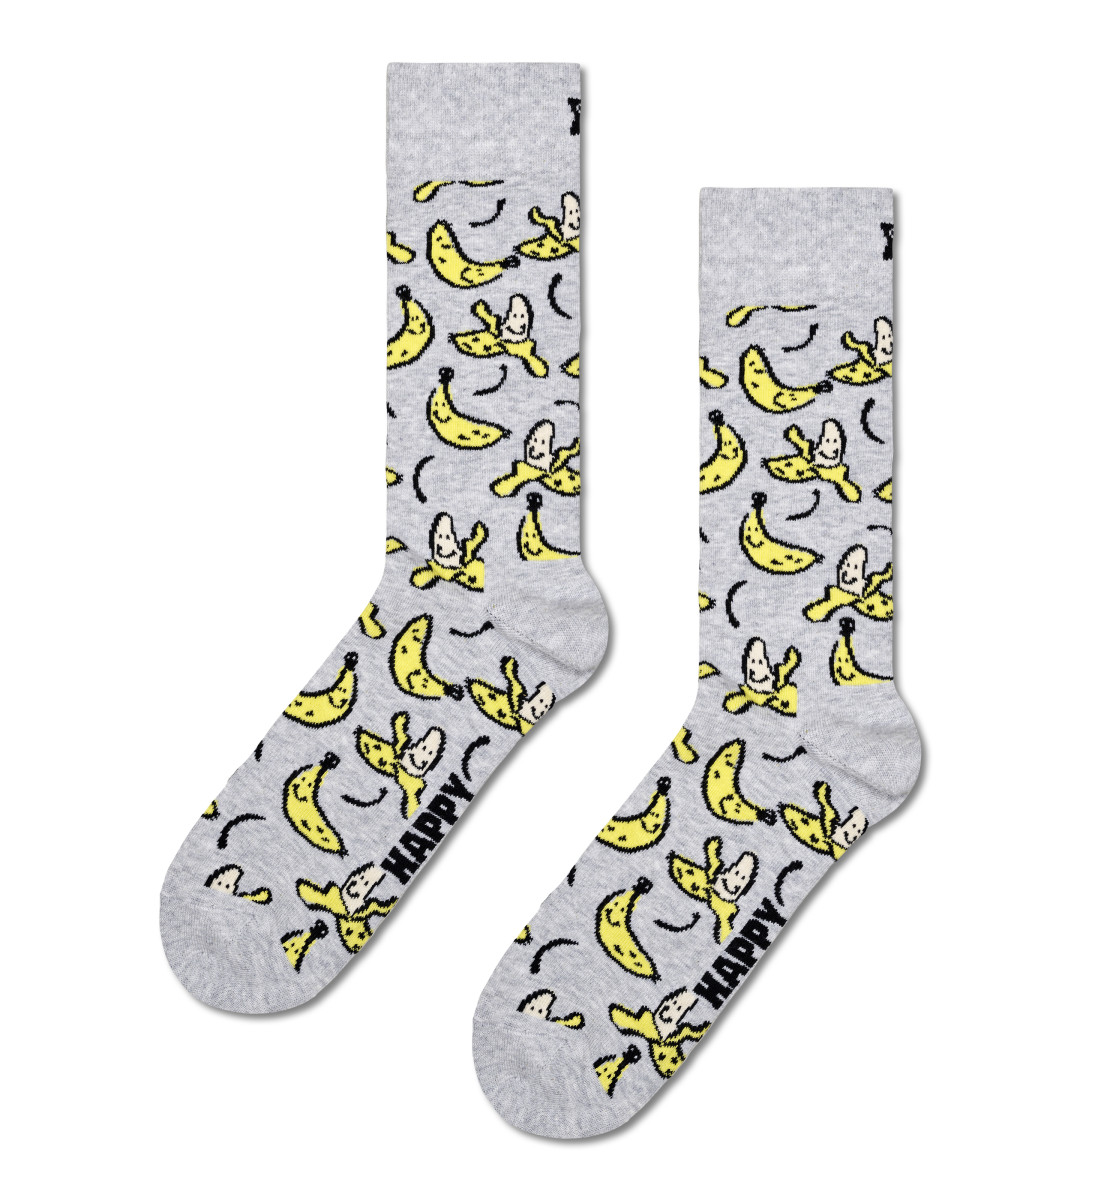 Socken "Banana"